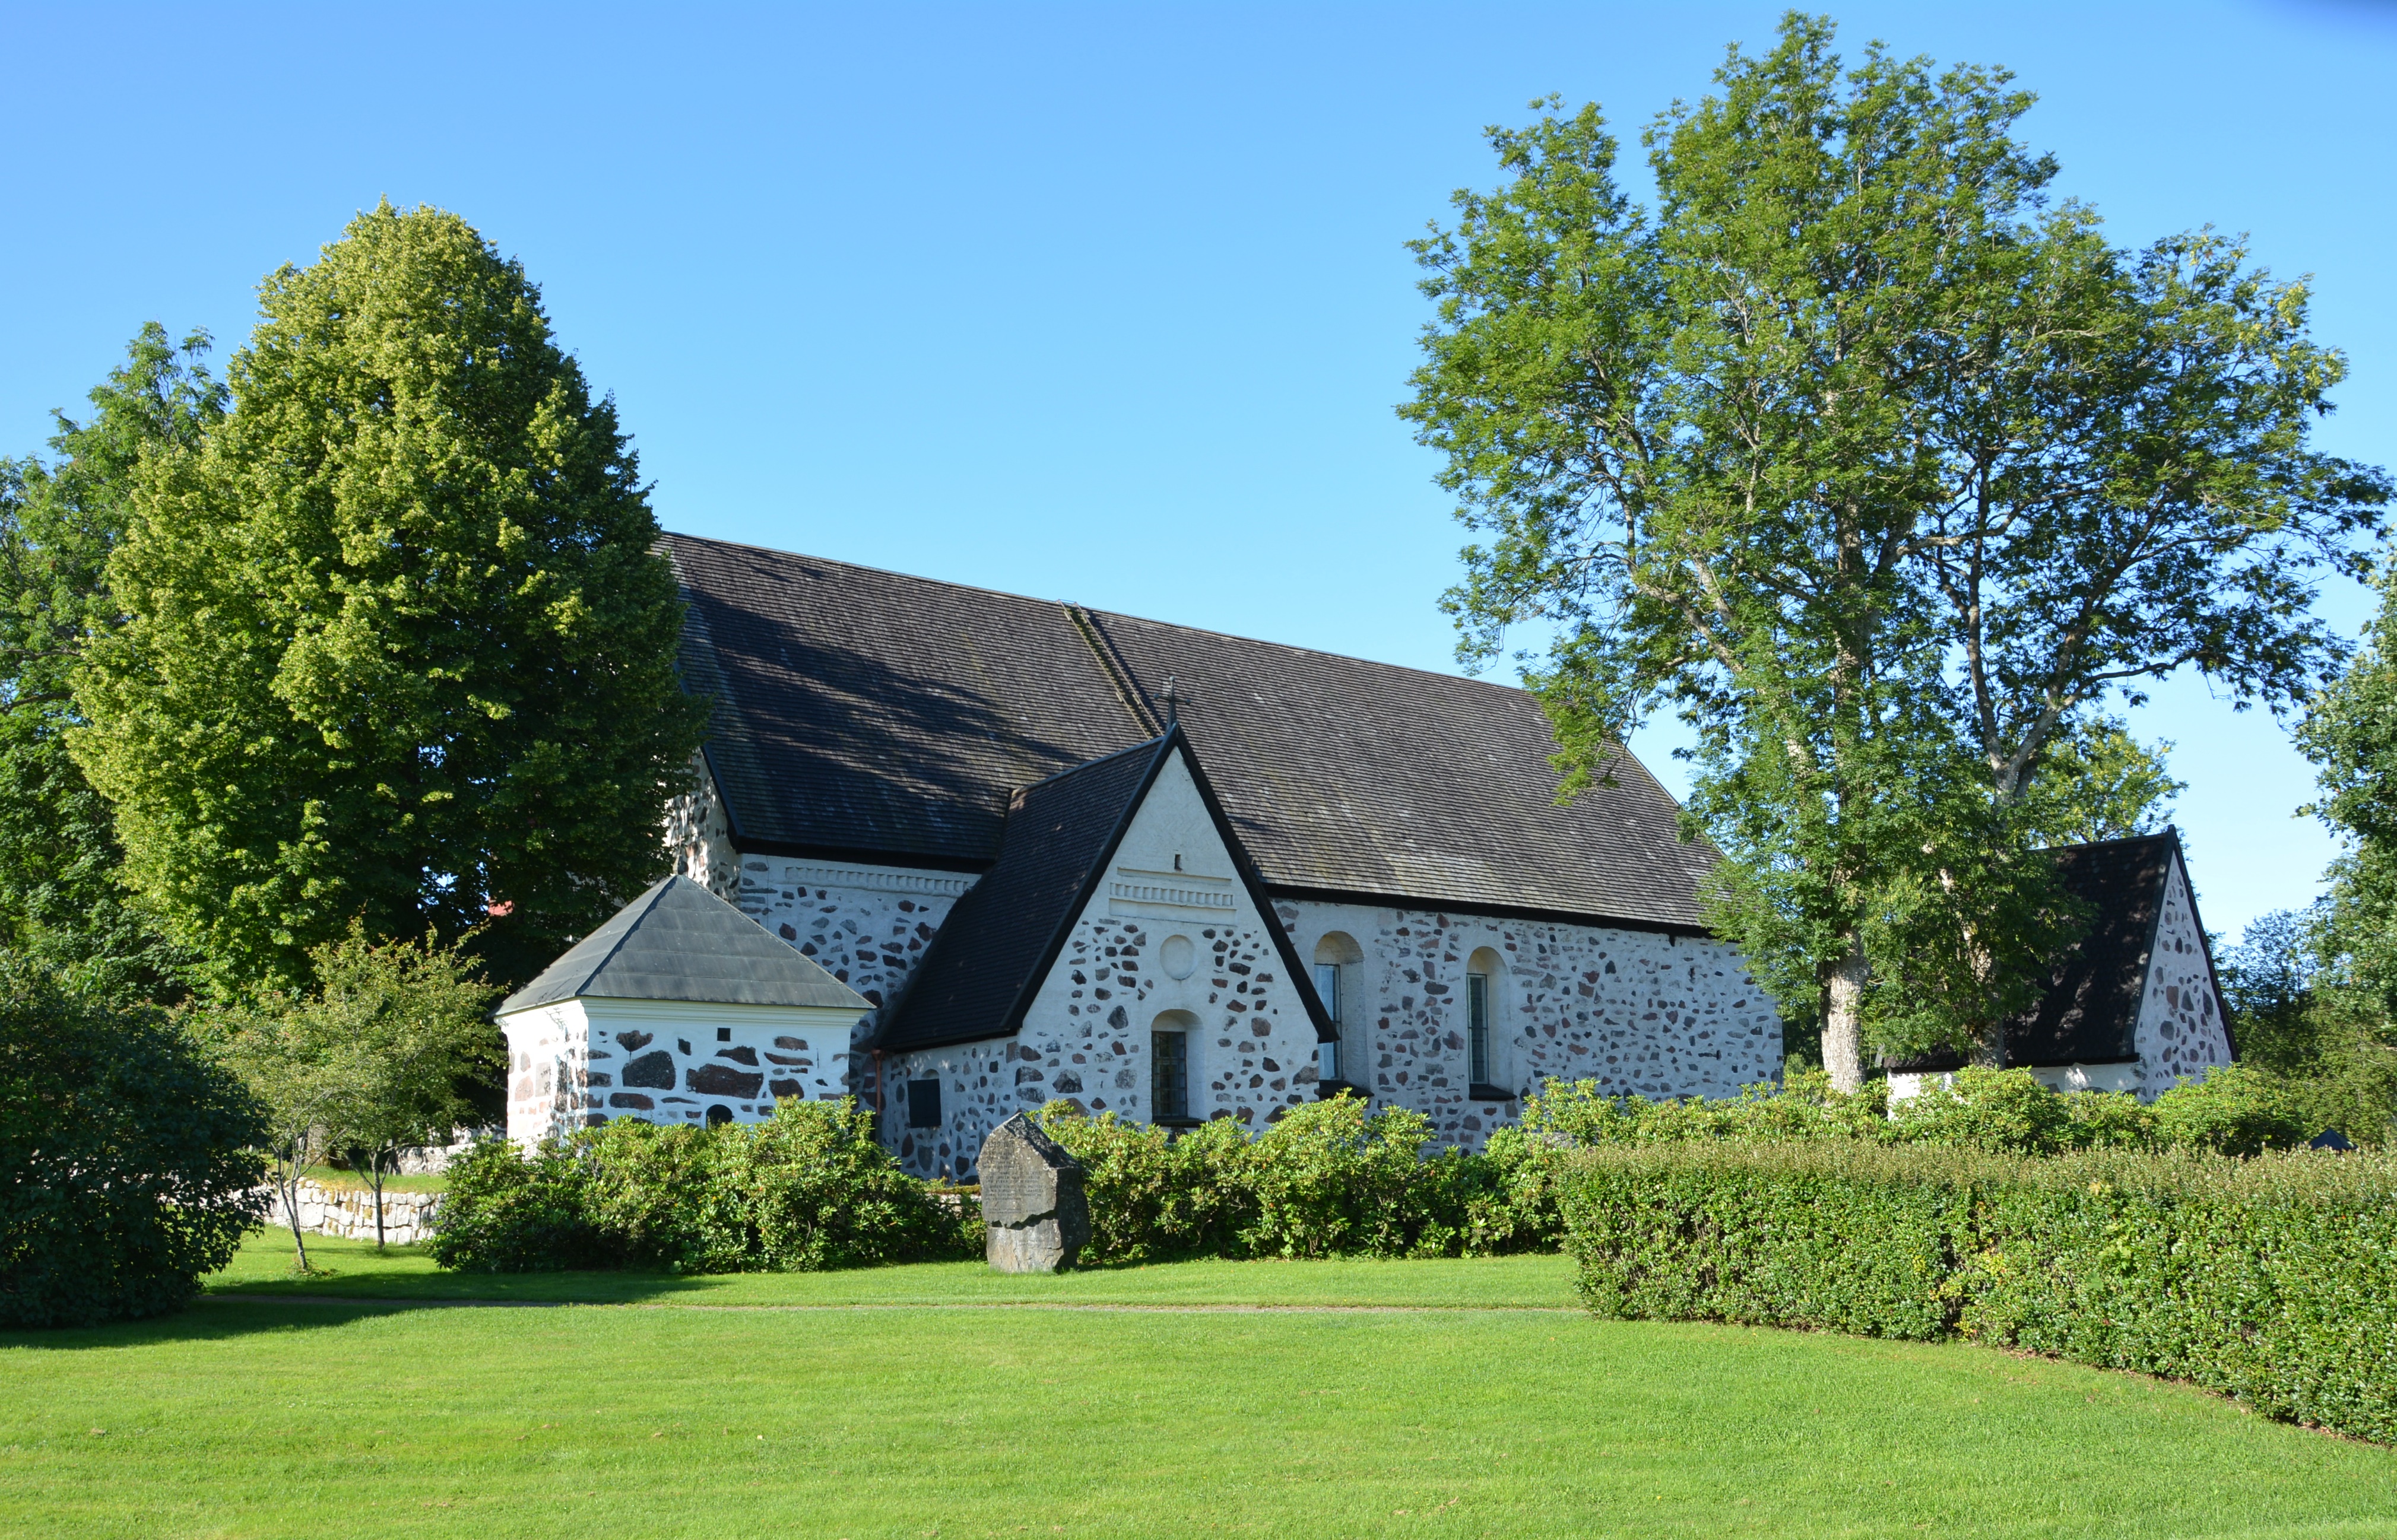 Tenala kyrka